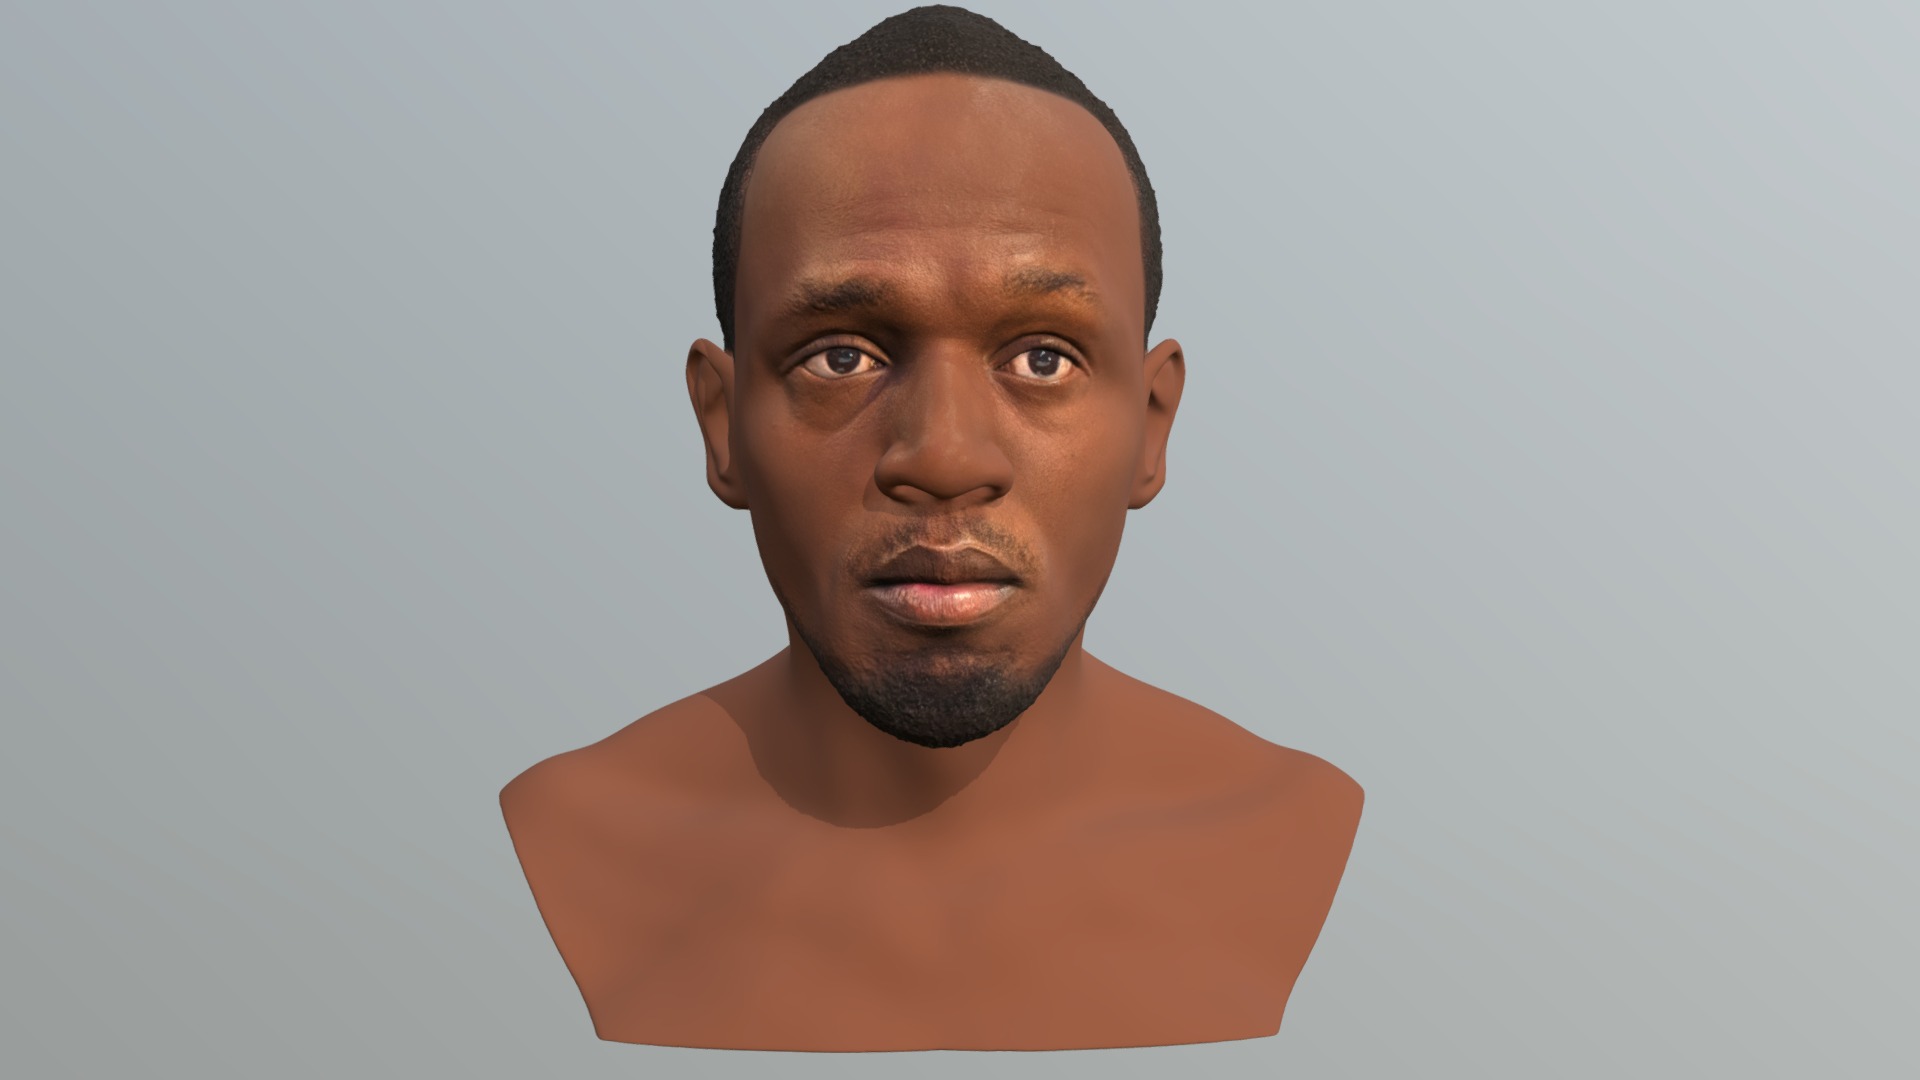 3D model Usain Bolt bust for full color 3D printing - This is a 3D model of the Usain Bolt bust for full color 3D printing. The 3D model is about a man with a beard.